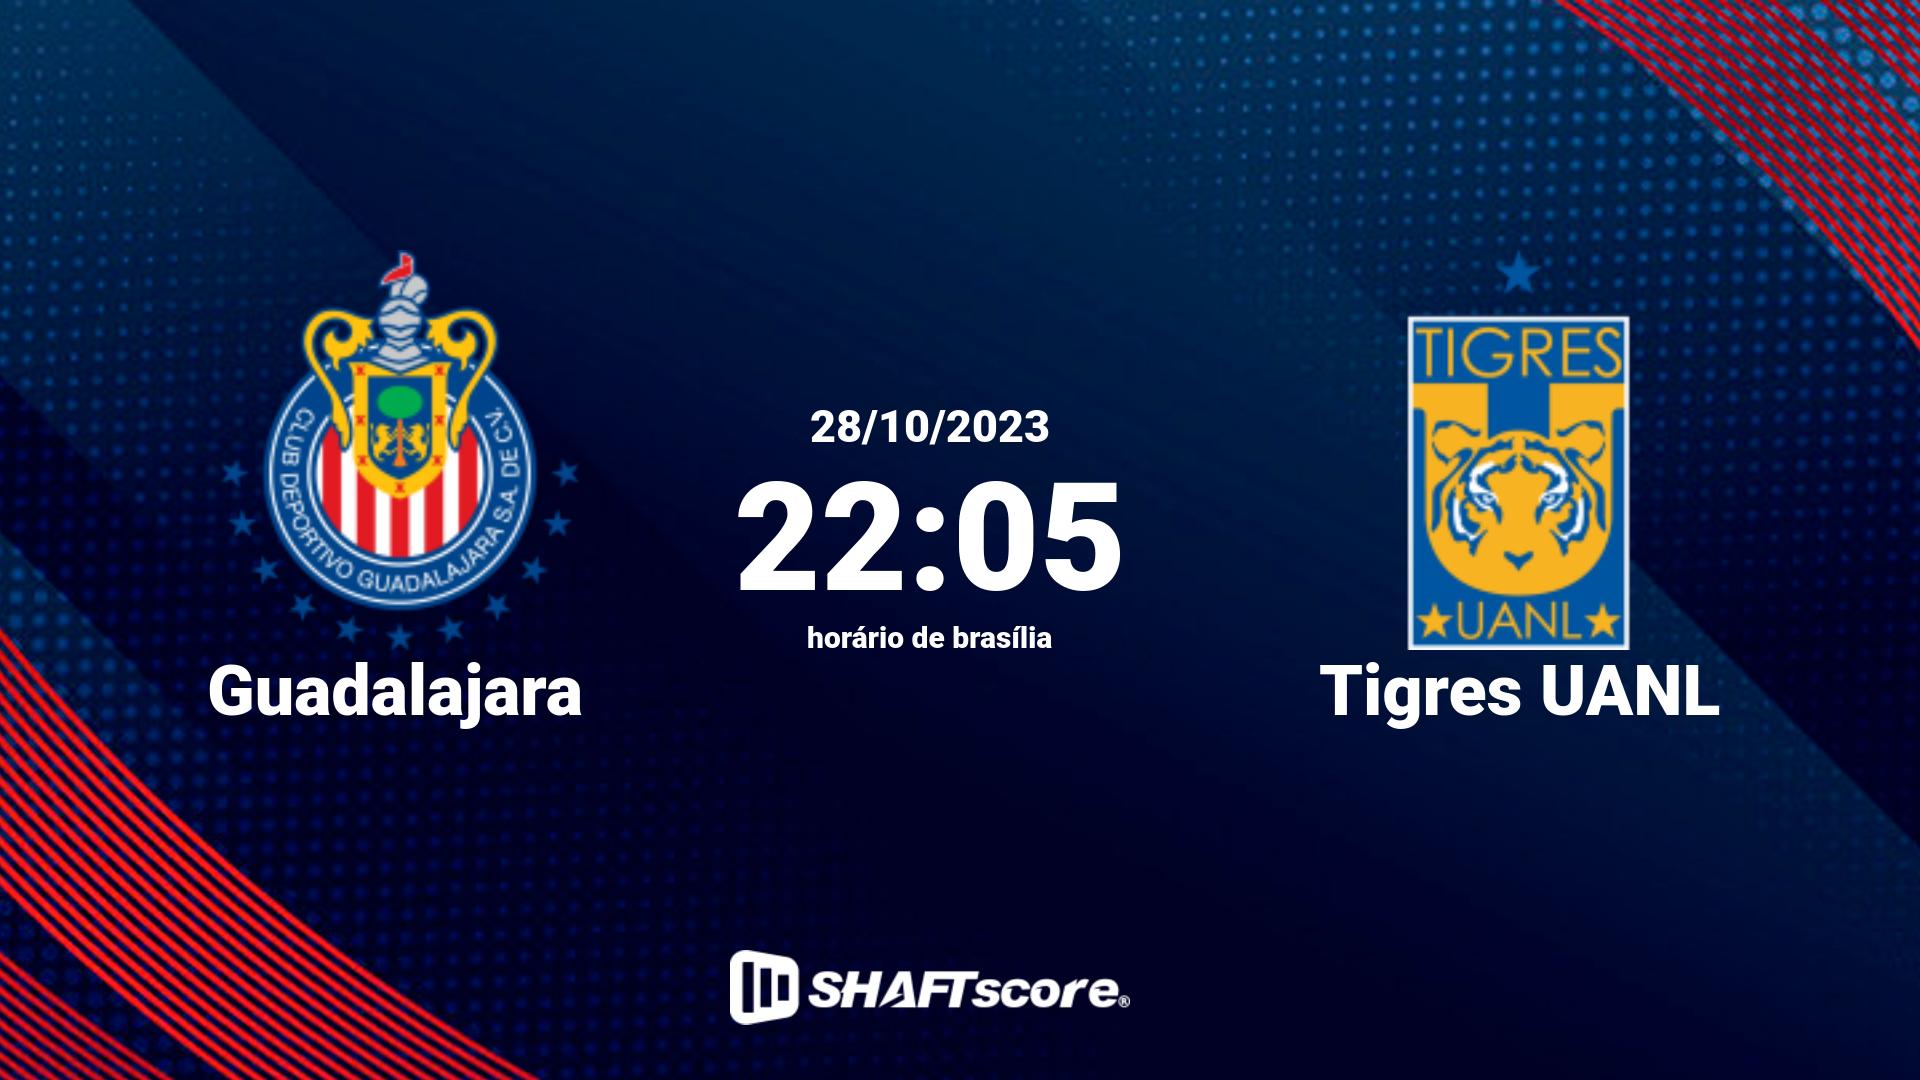 Estatísticas do jogo Guadalajara vs Tigres UANL 28.10 22:05